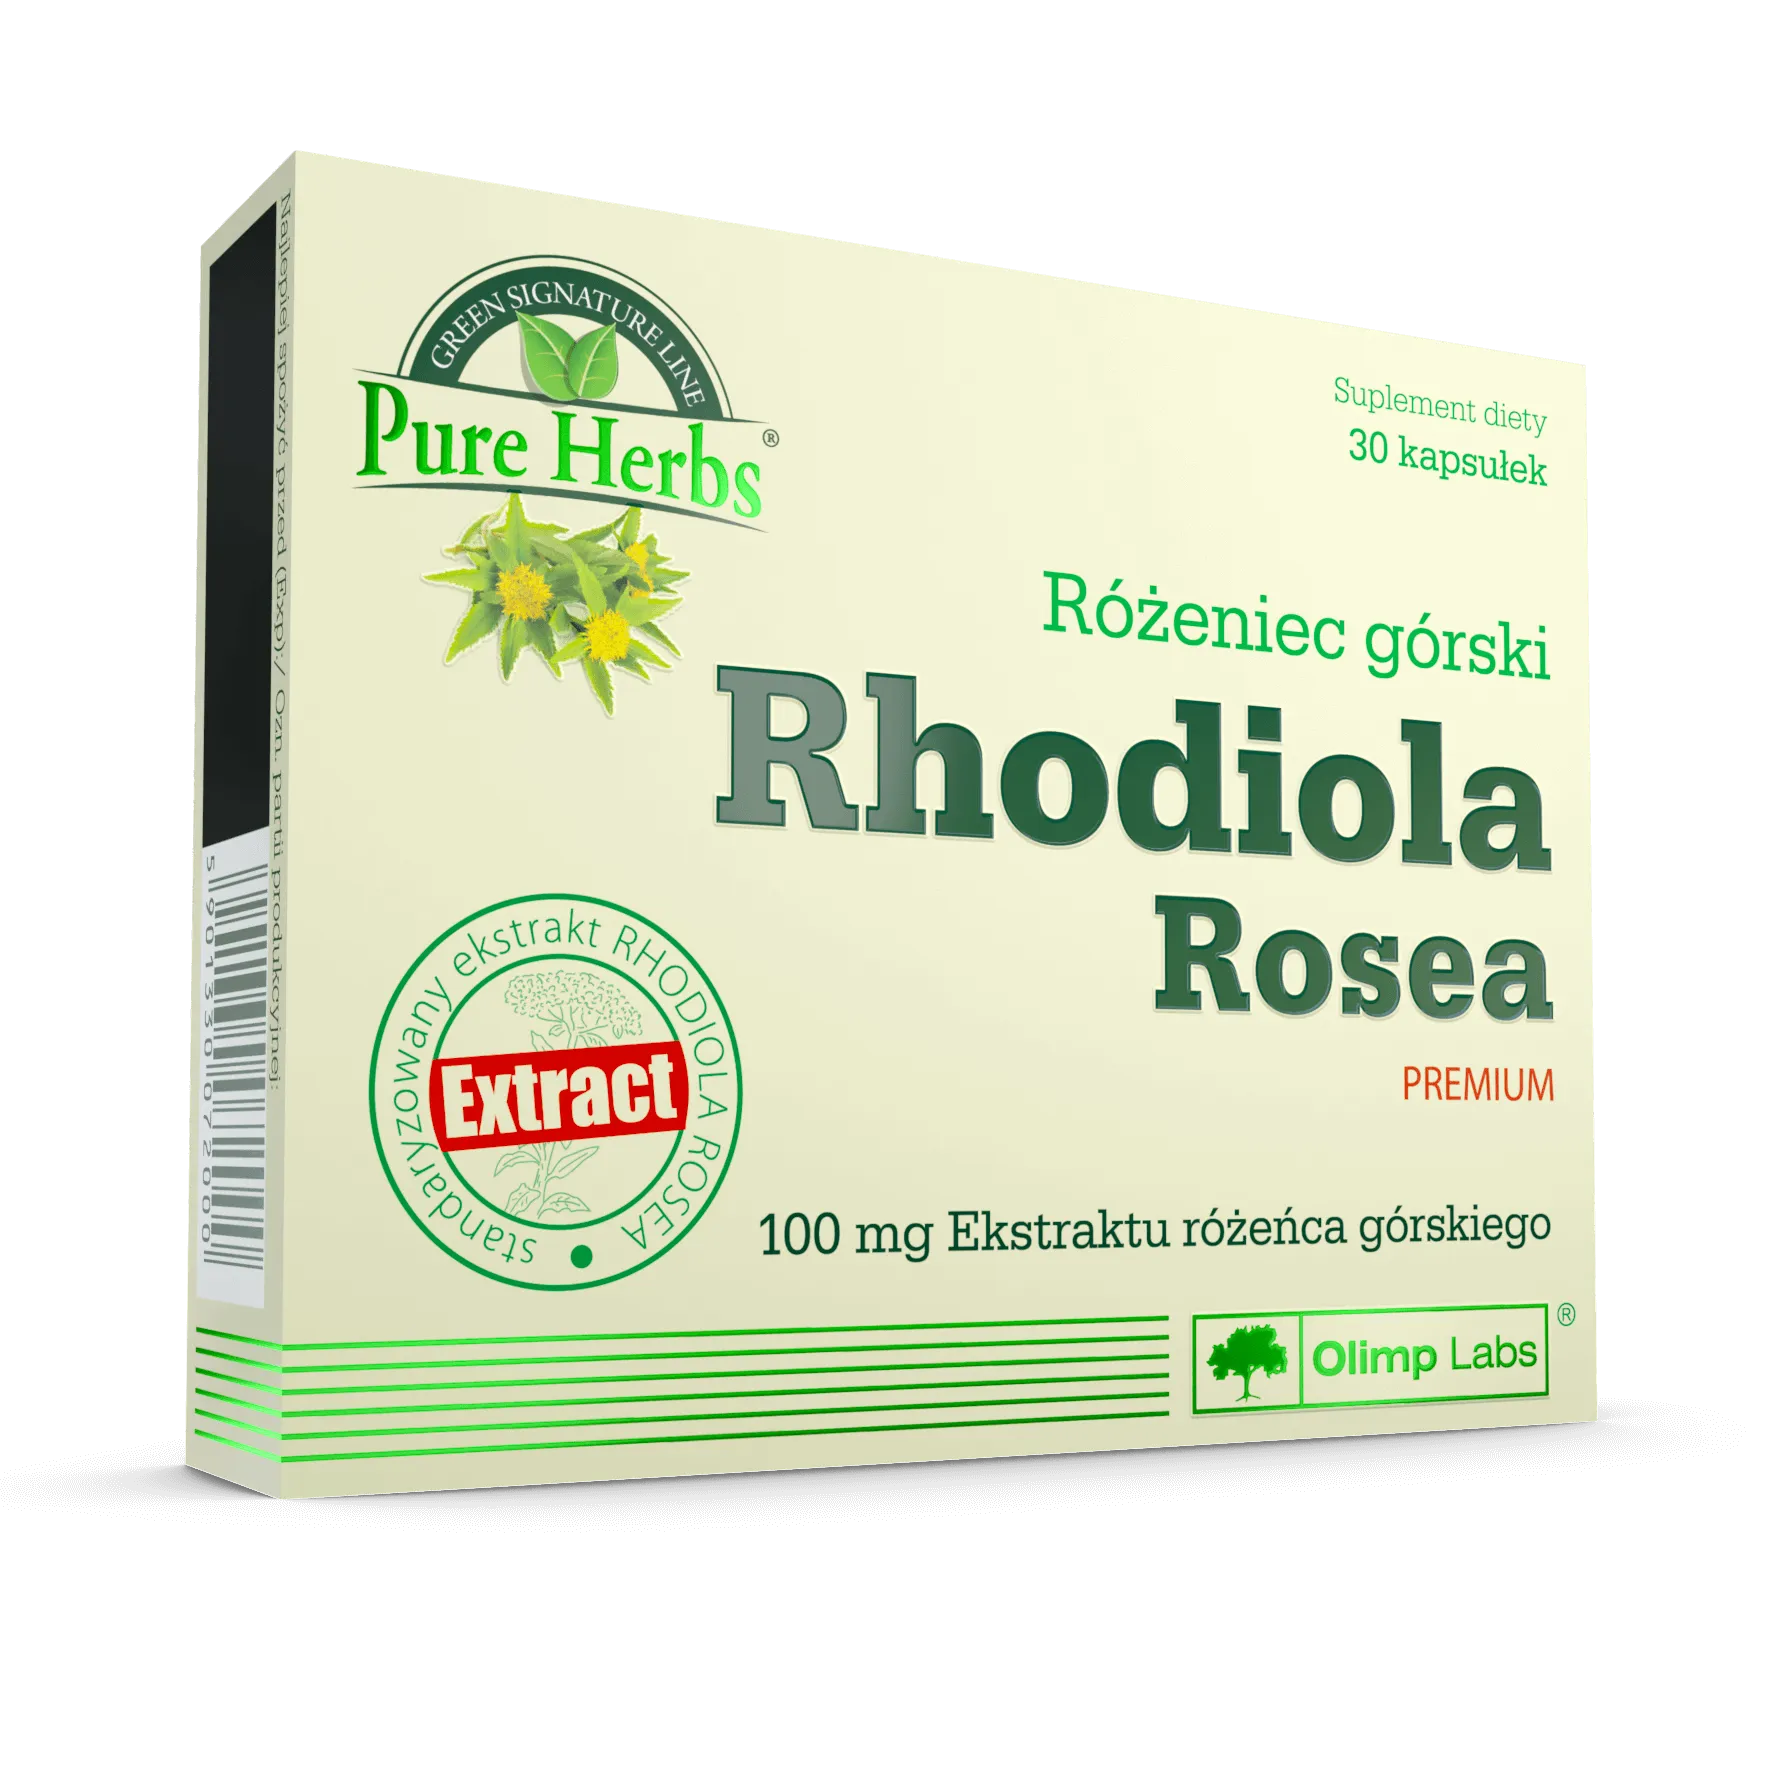 Rhodiola Rosea Premium, suplement diety, 30 kapsułek